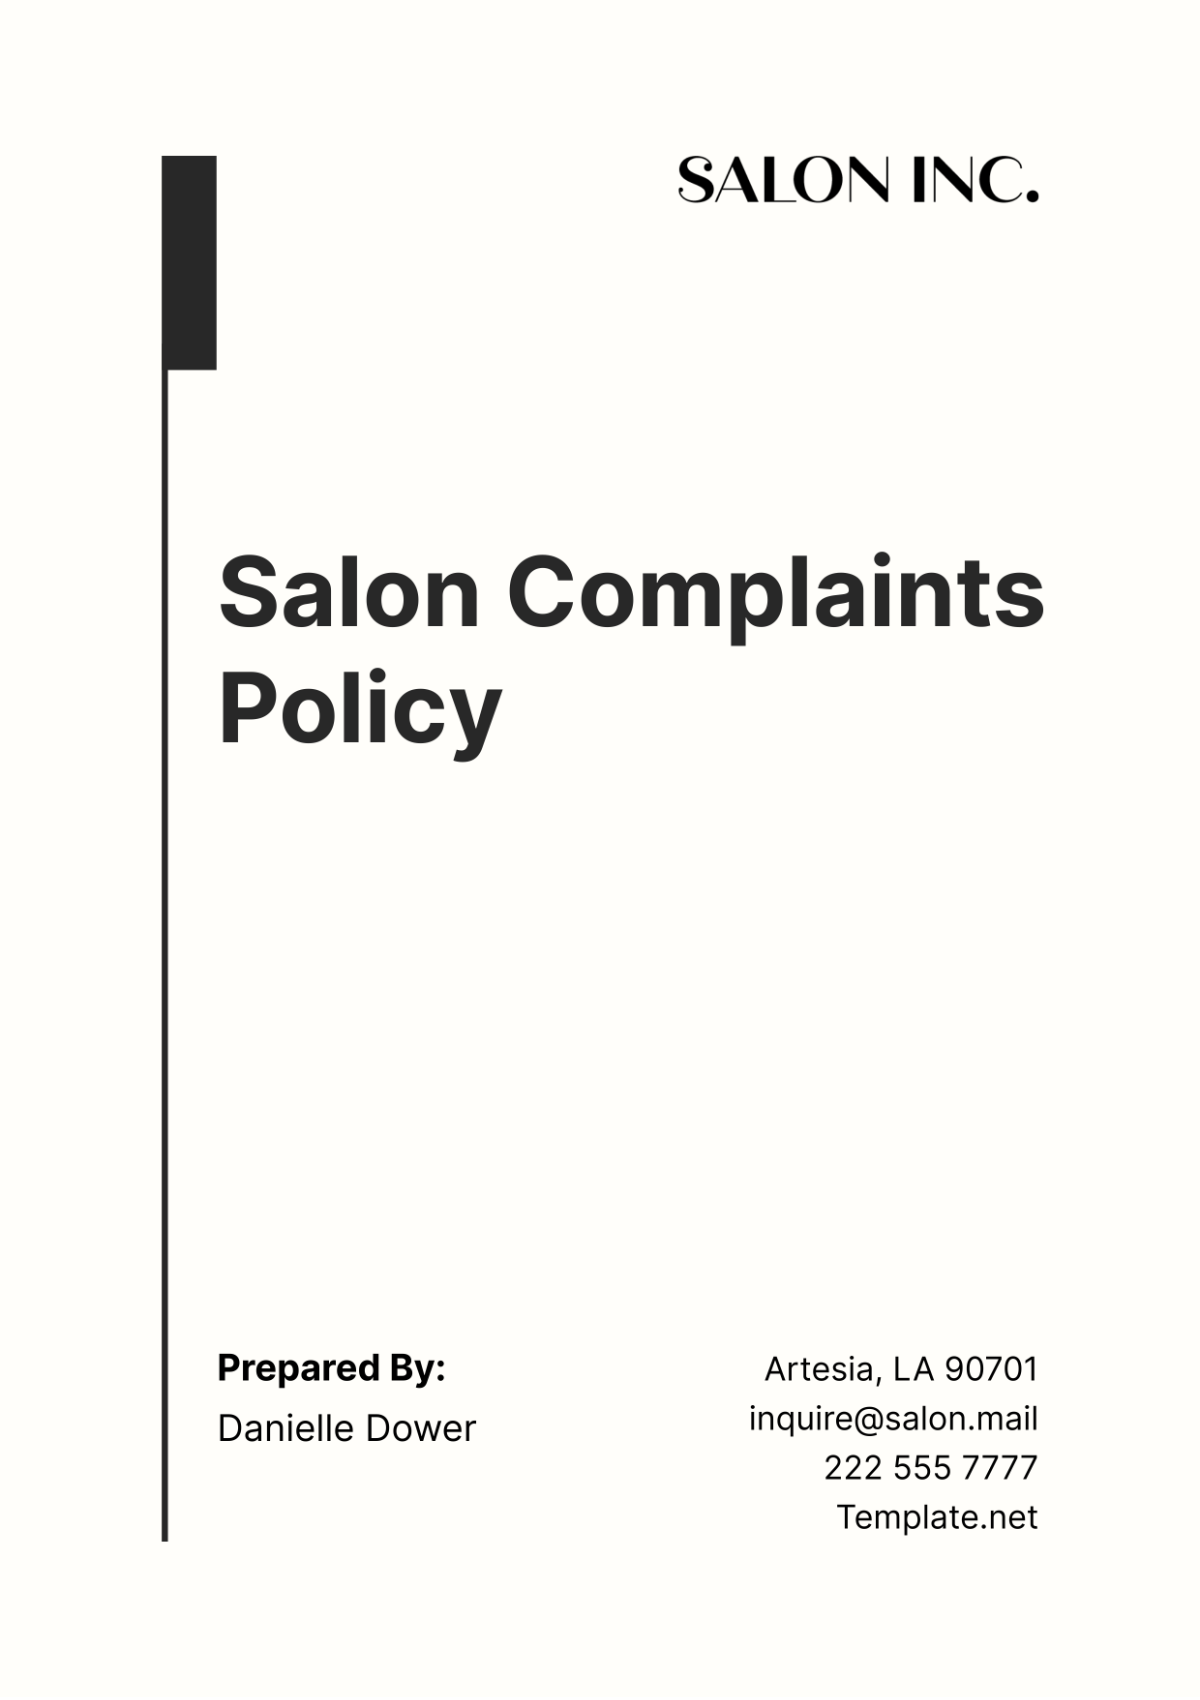 Salon Complaints Policy Template